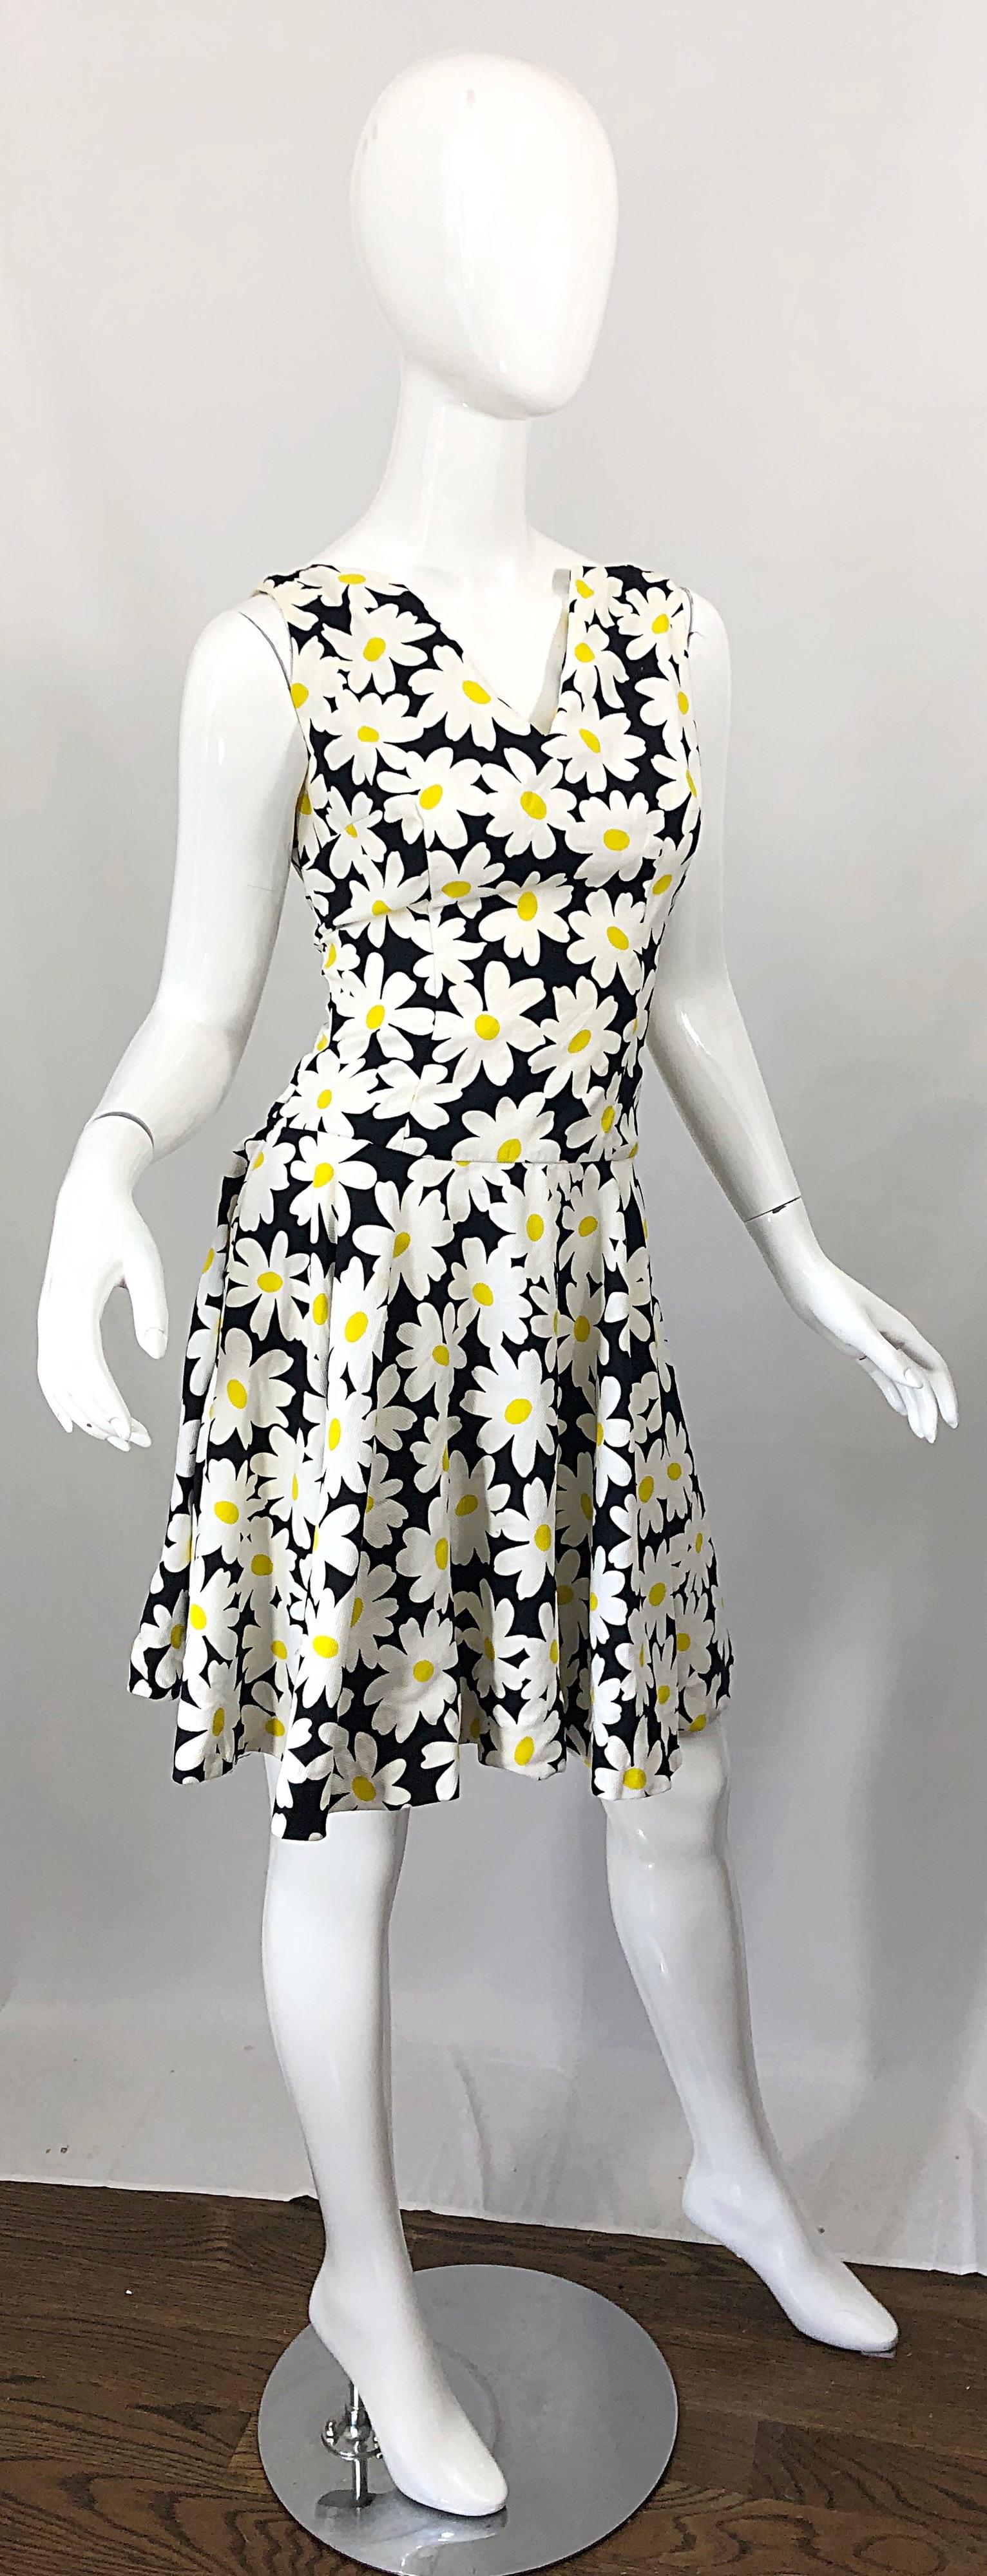 I Magnin 1960s Black and White Daisy Print Pique Cotton Vintage 60s A Line Dress For Sale 2